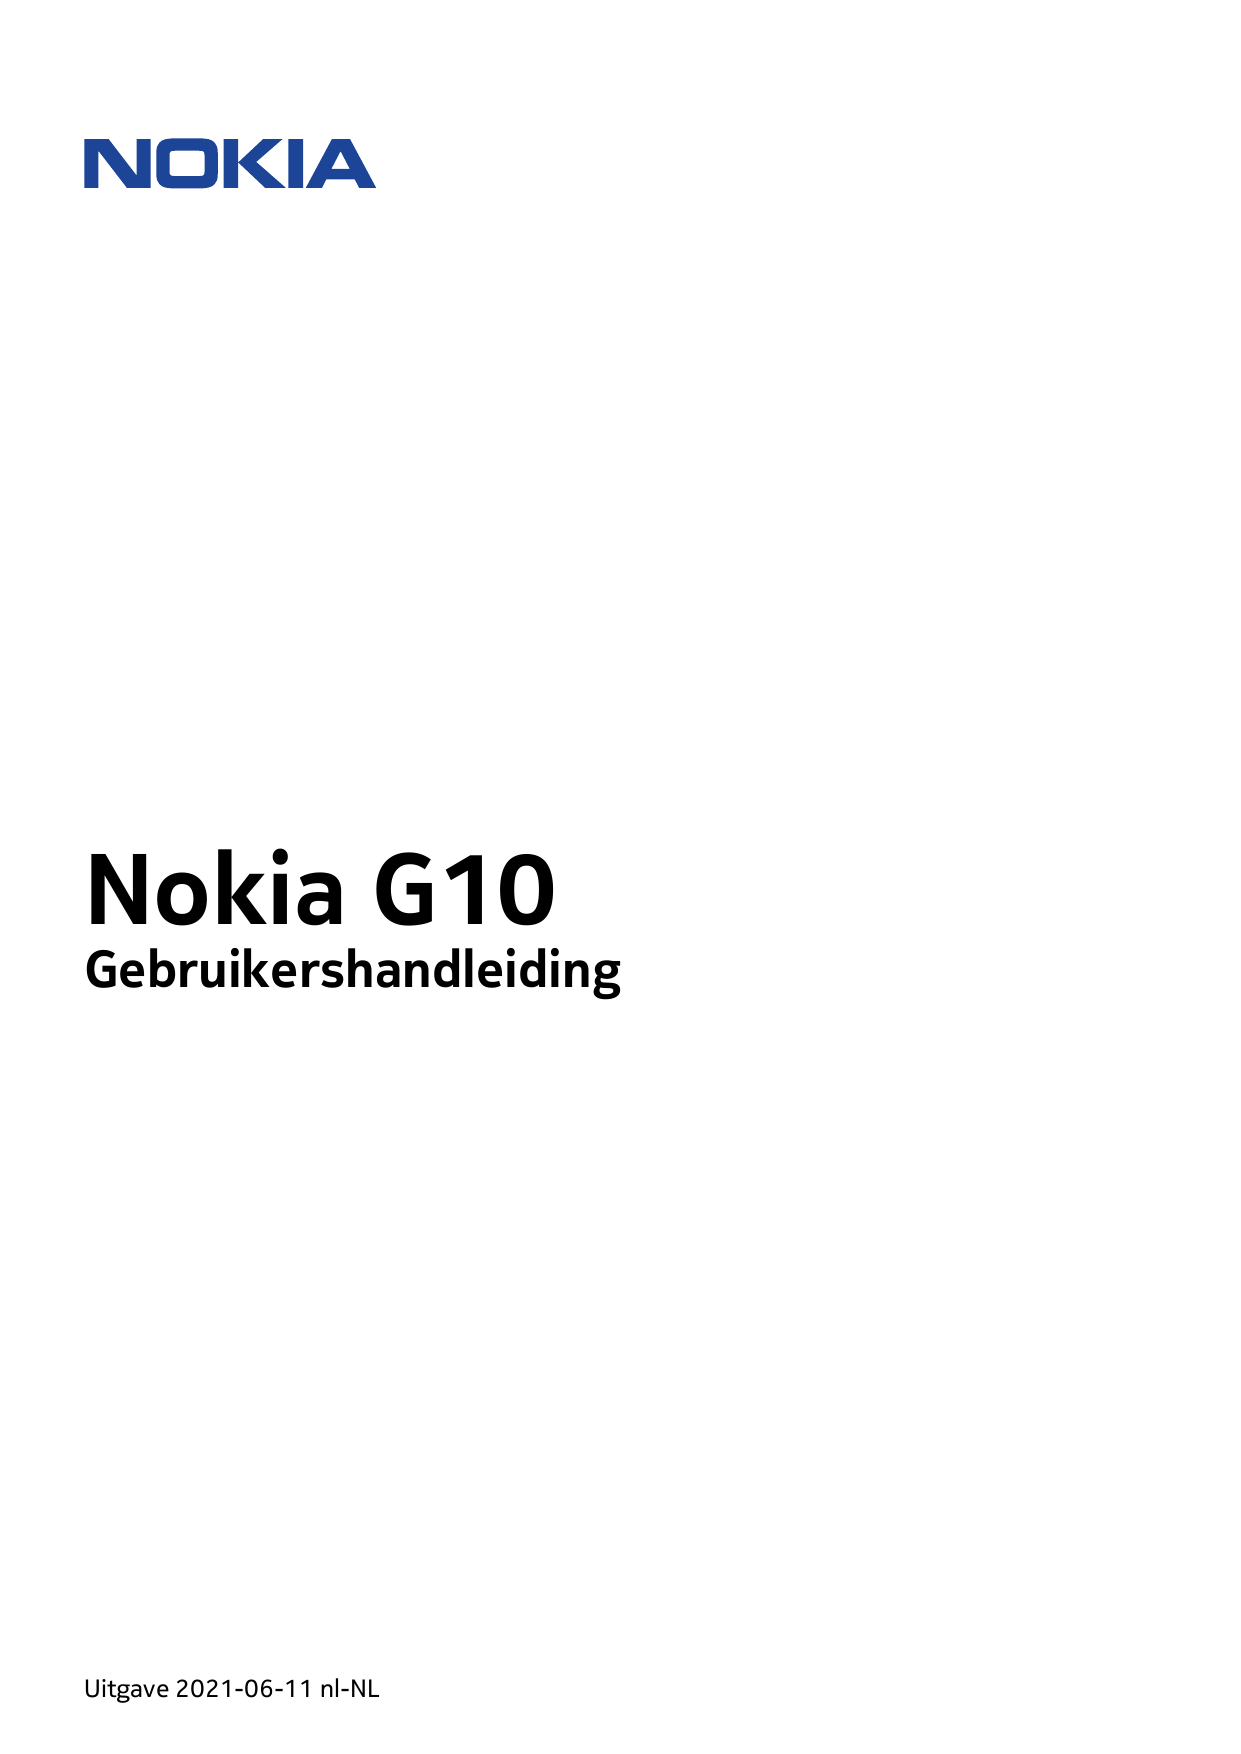 Nokia G10GebruikershandleidingUitgave 2021-06-11 nl-NL